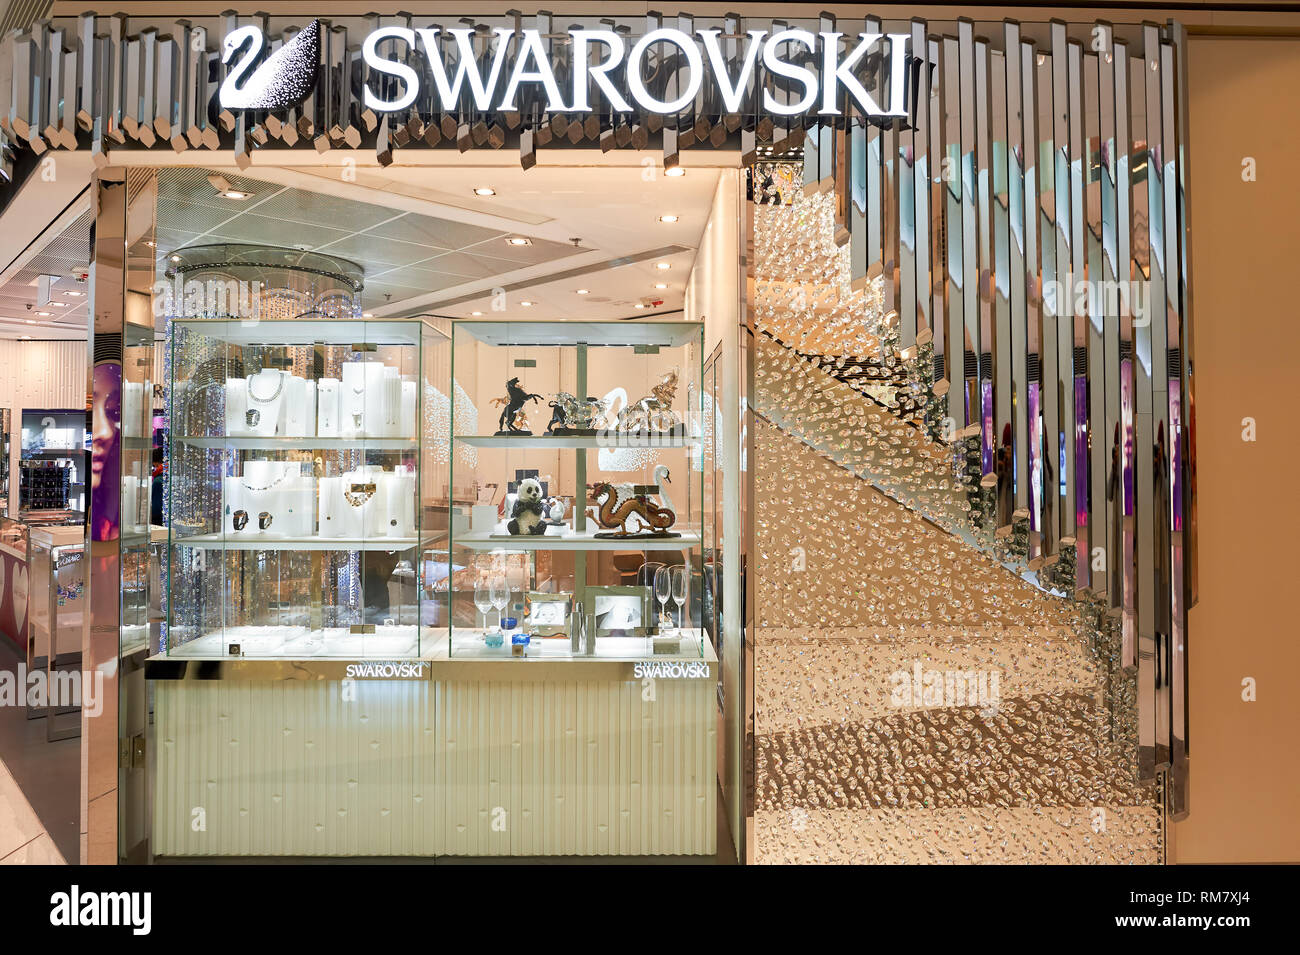 Swarovski Shop Shopping Mall Fotos e Imágenes de stock - Alamy